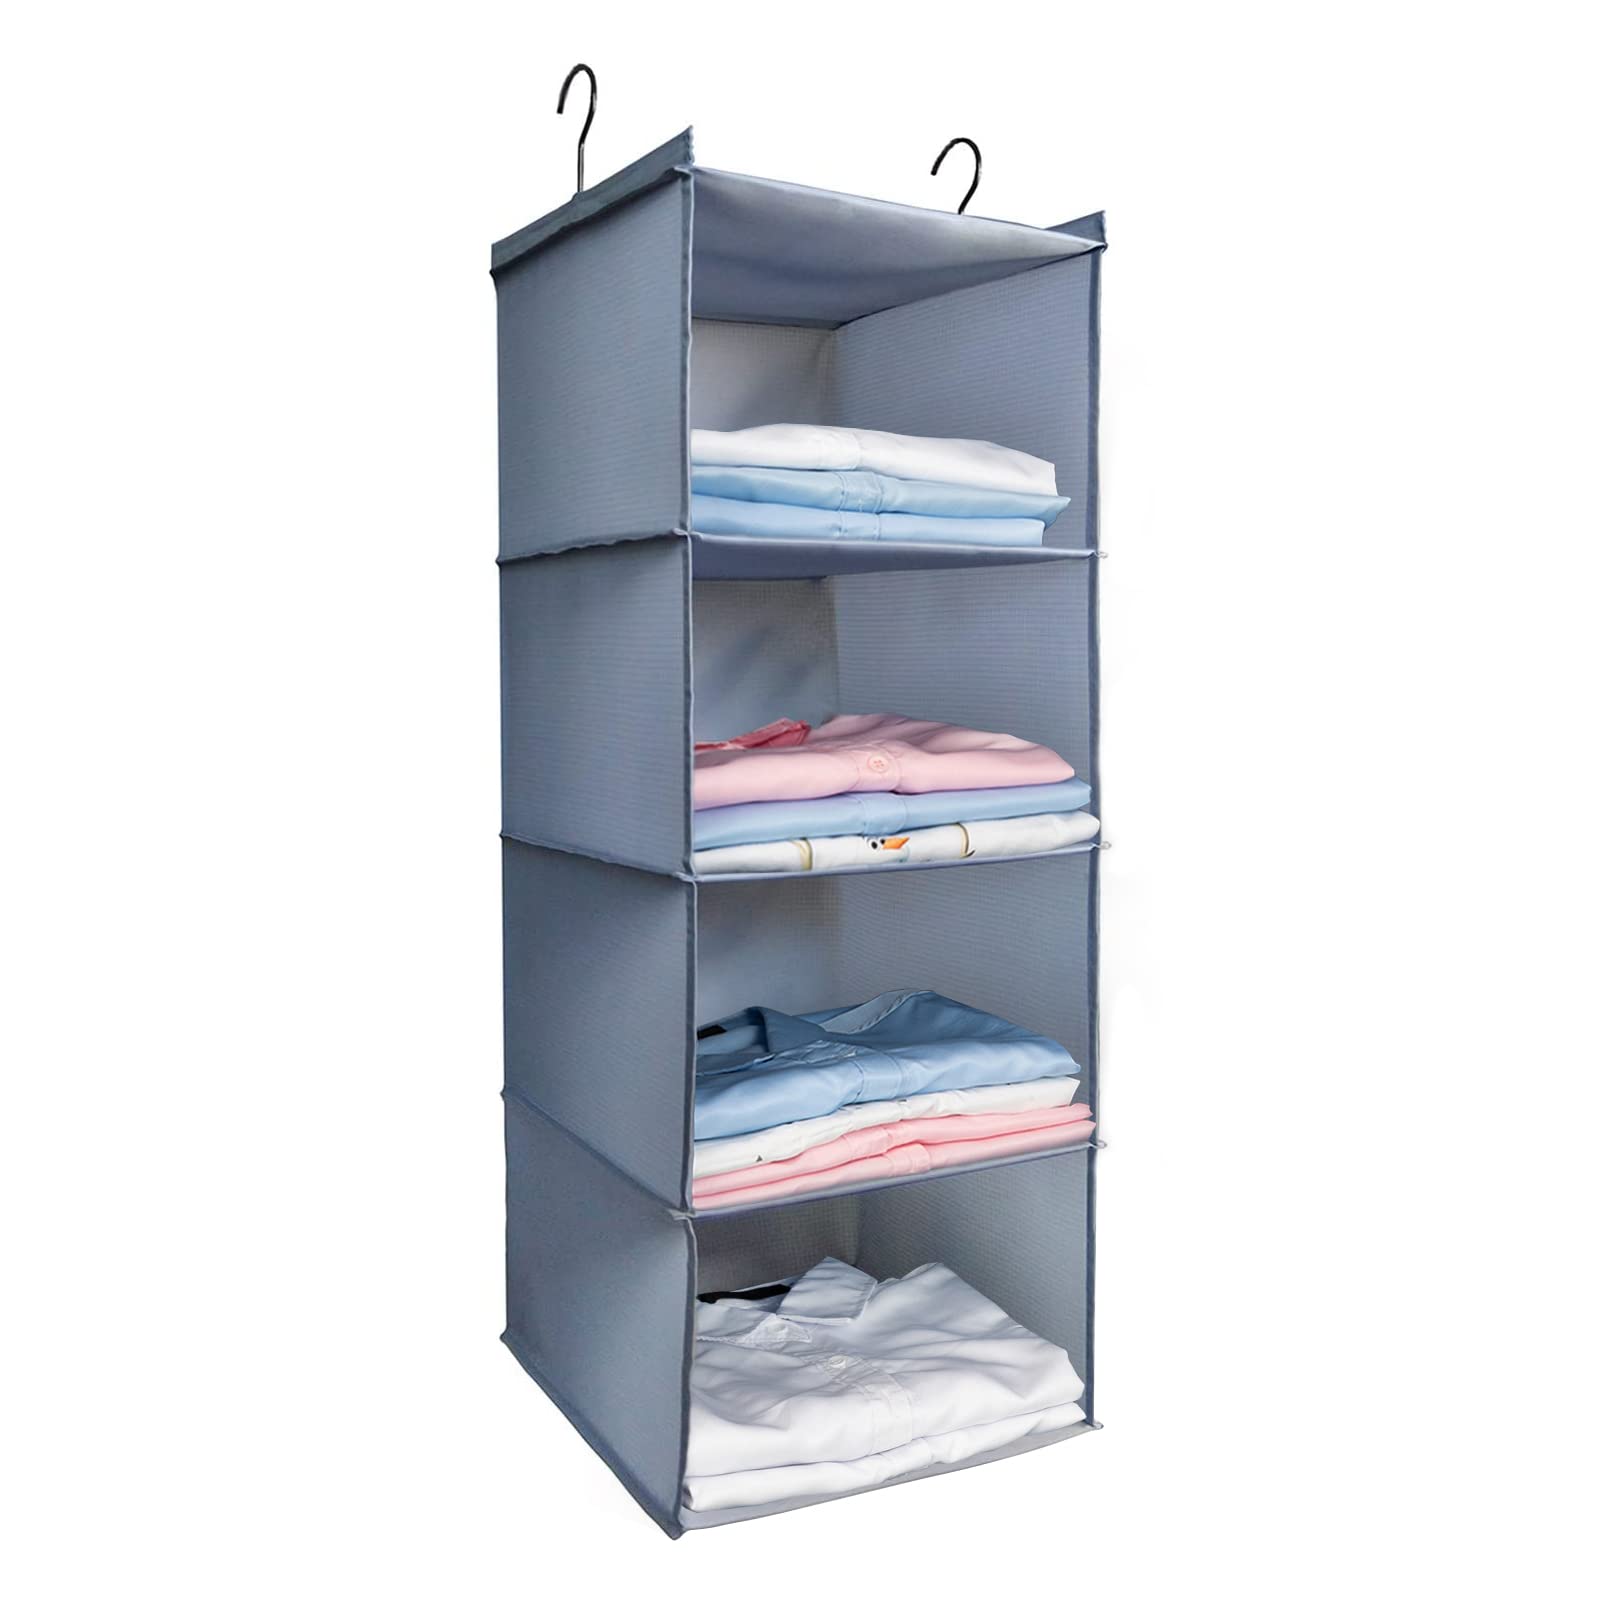 DonYeco Hanging Closet Organizer, Easy Mount Foldable 4-Shelf Hanging Closet Wardrobe Storage Shelves, Clothes Handbag Shoes Accessories Storage, Washable Oxford Cloth Fabric, Gray